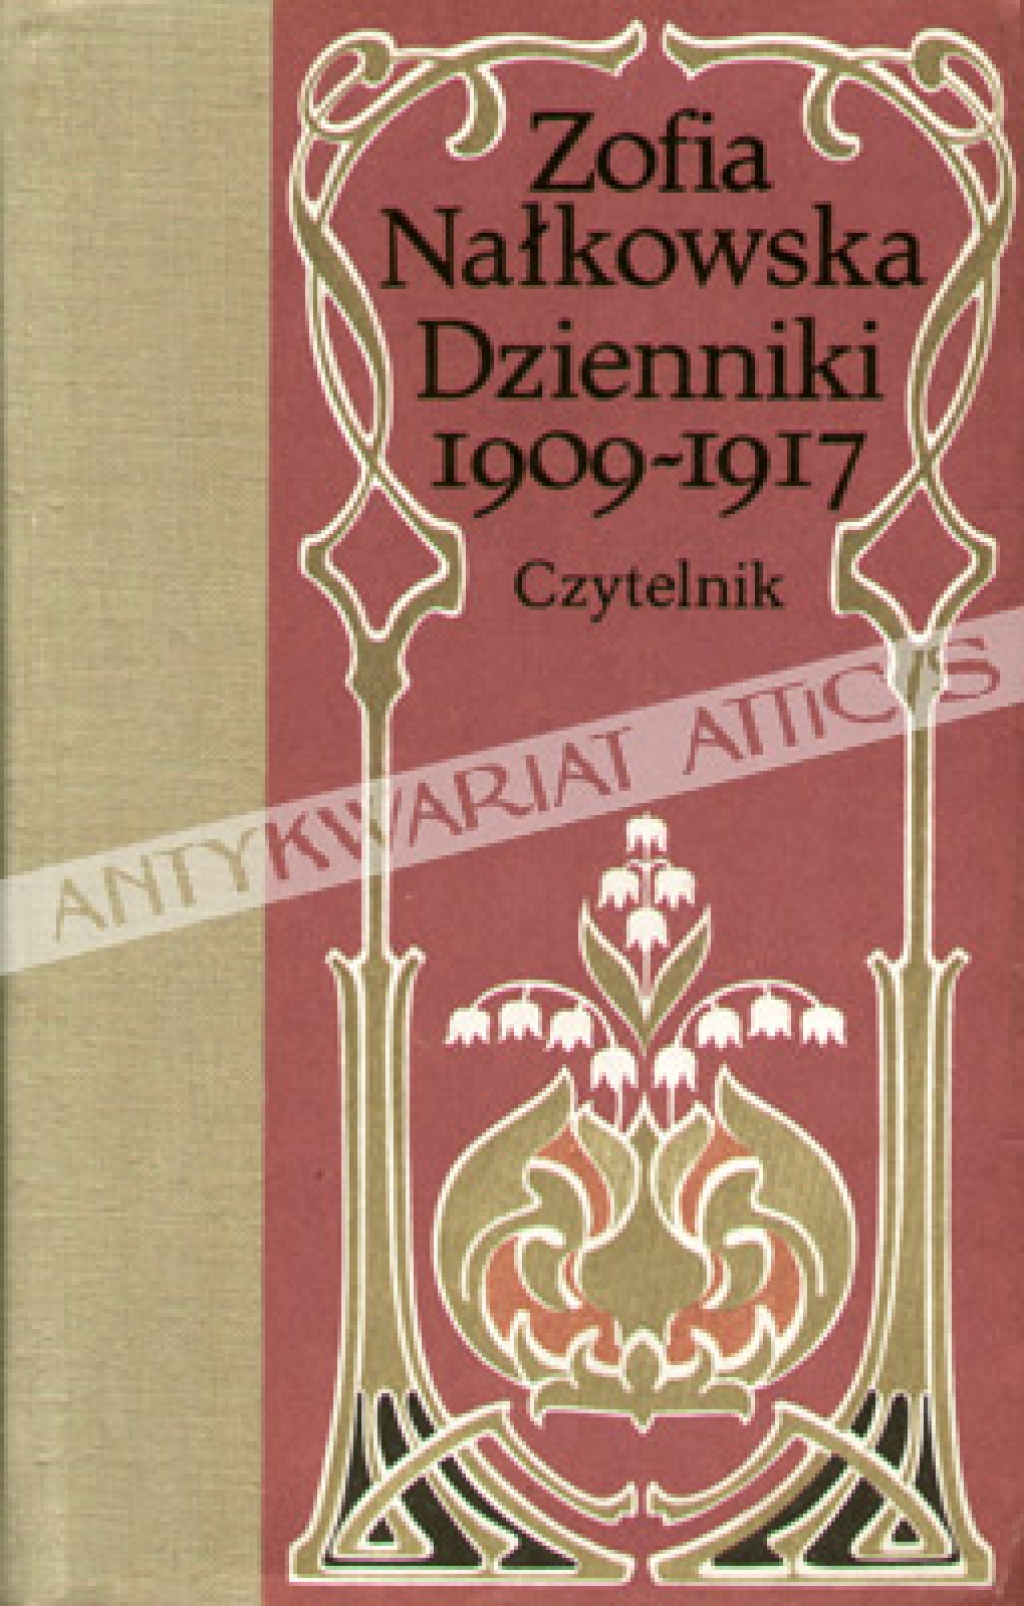 Dzienniki, t. II: 1909-1917